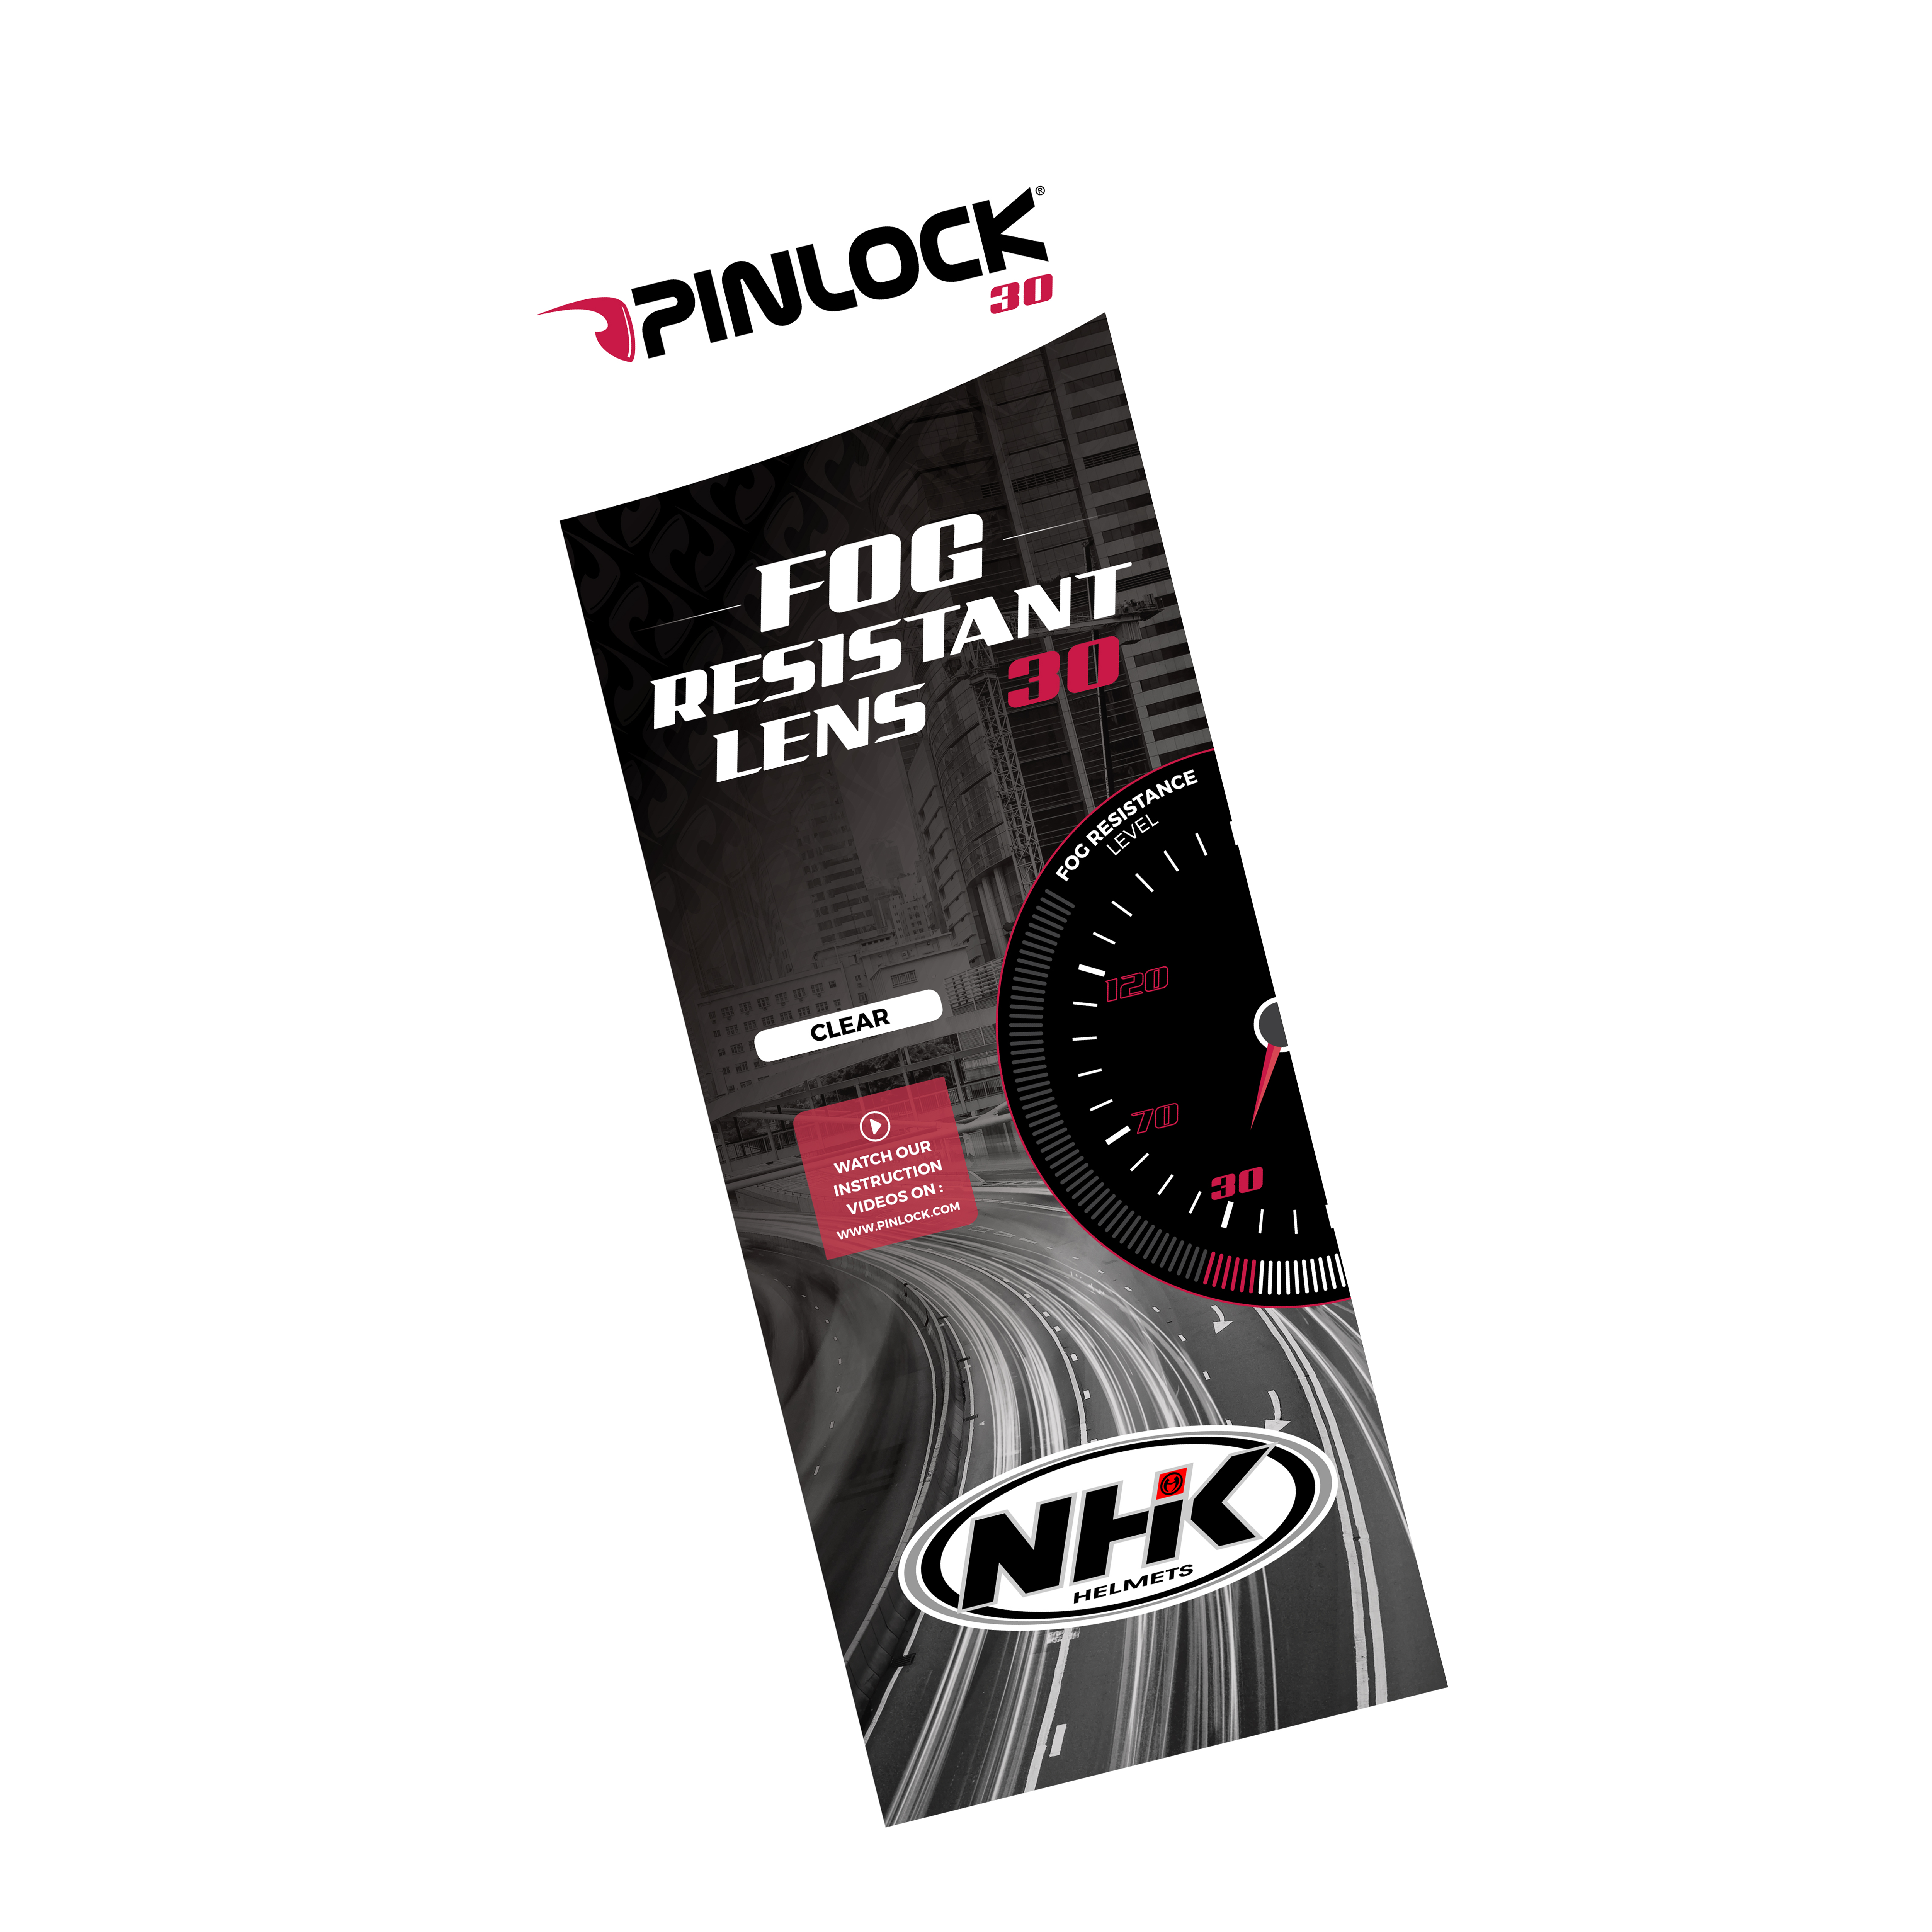 Promo Pinlock 30 Njs Original Universal